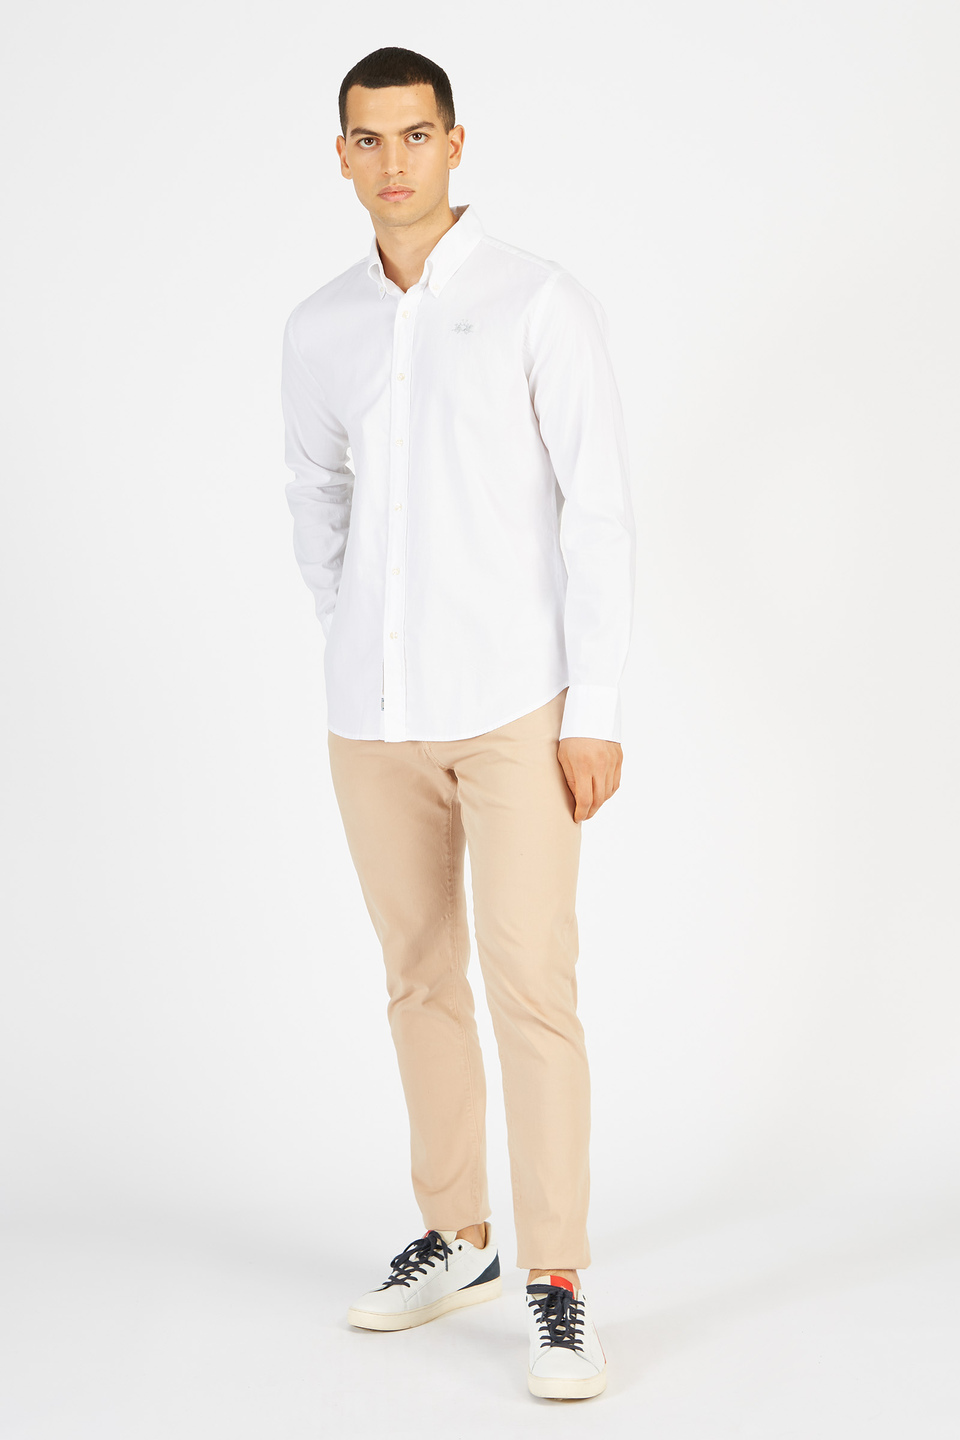 Men's shirt in a slim fit - Leon | La Martina - Official Online Shop